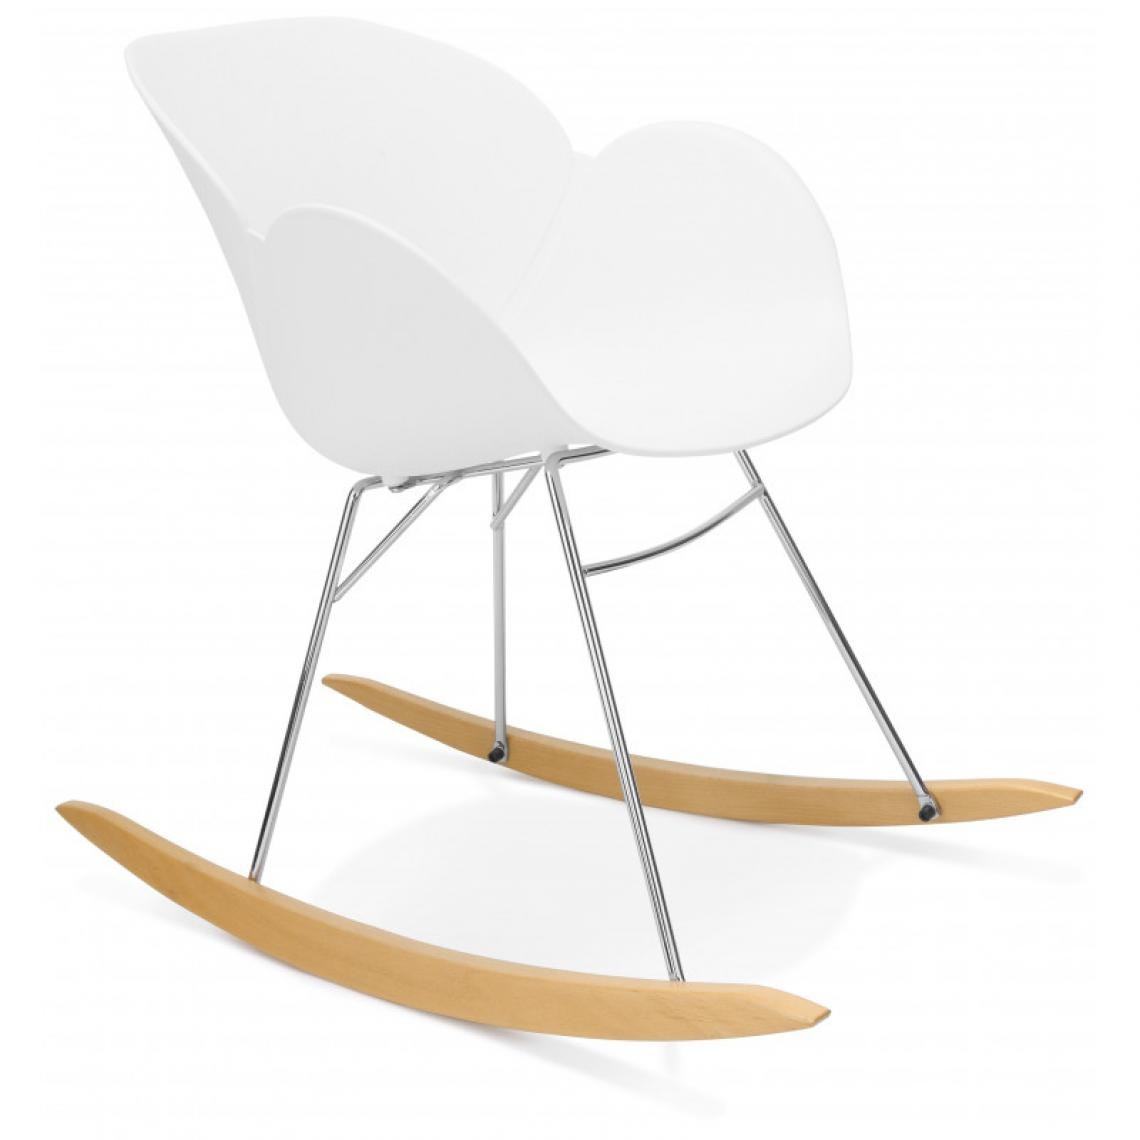 Kokoon Design - Rocking chair "knebel" kokoon - blanc - Chaises